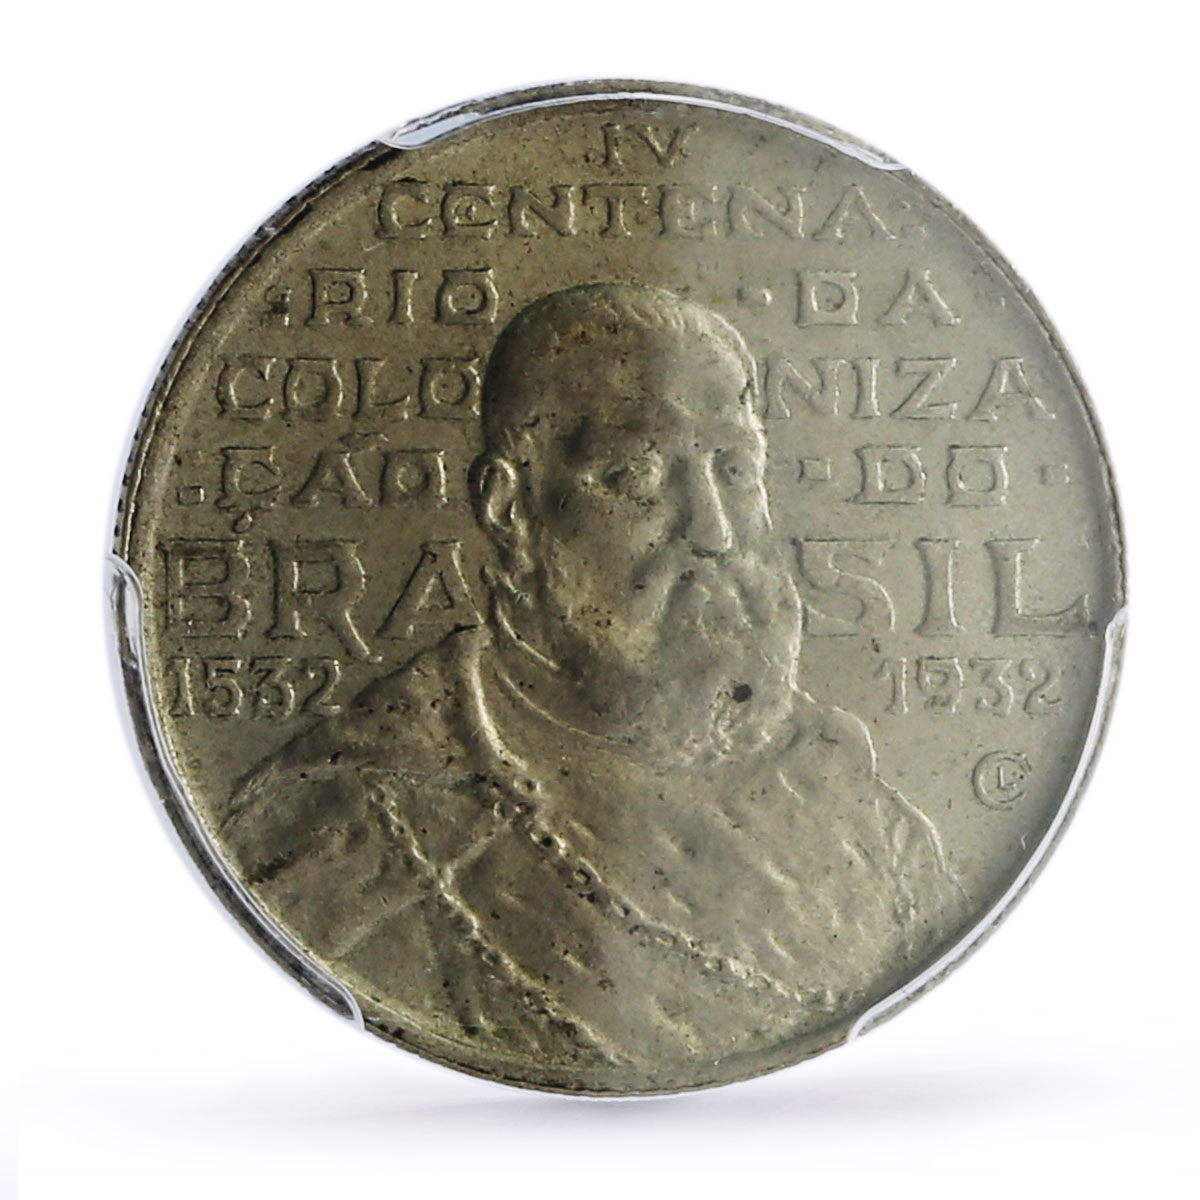 Brazil 2000 reis 400 Years Colonization King Joao III MS64 PCGS silver coin 1932